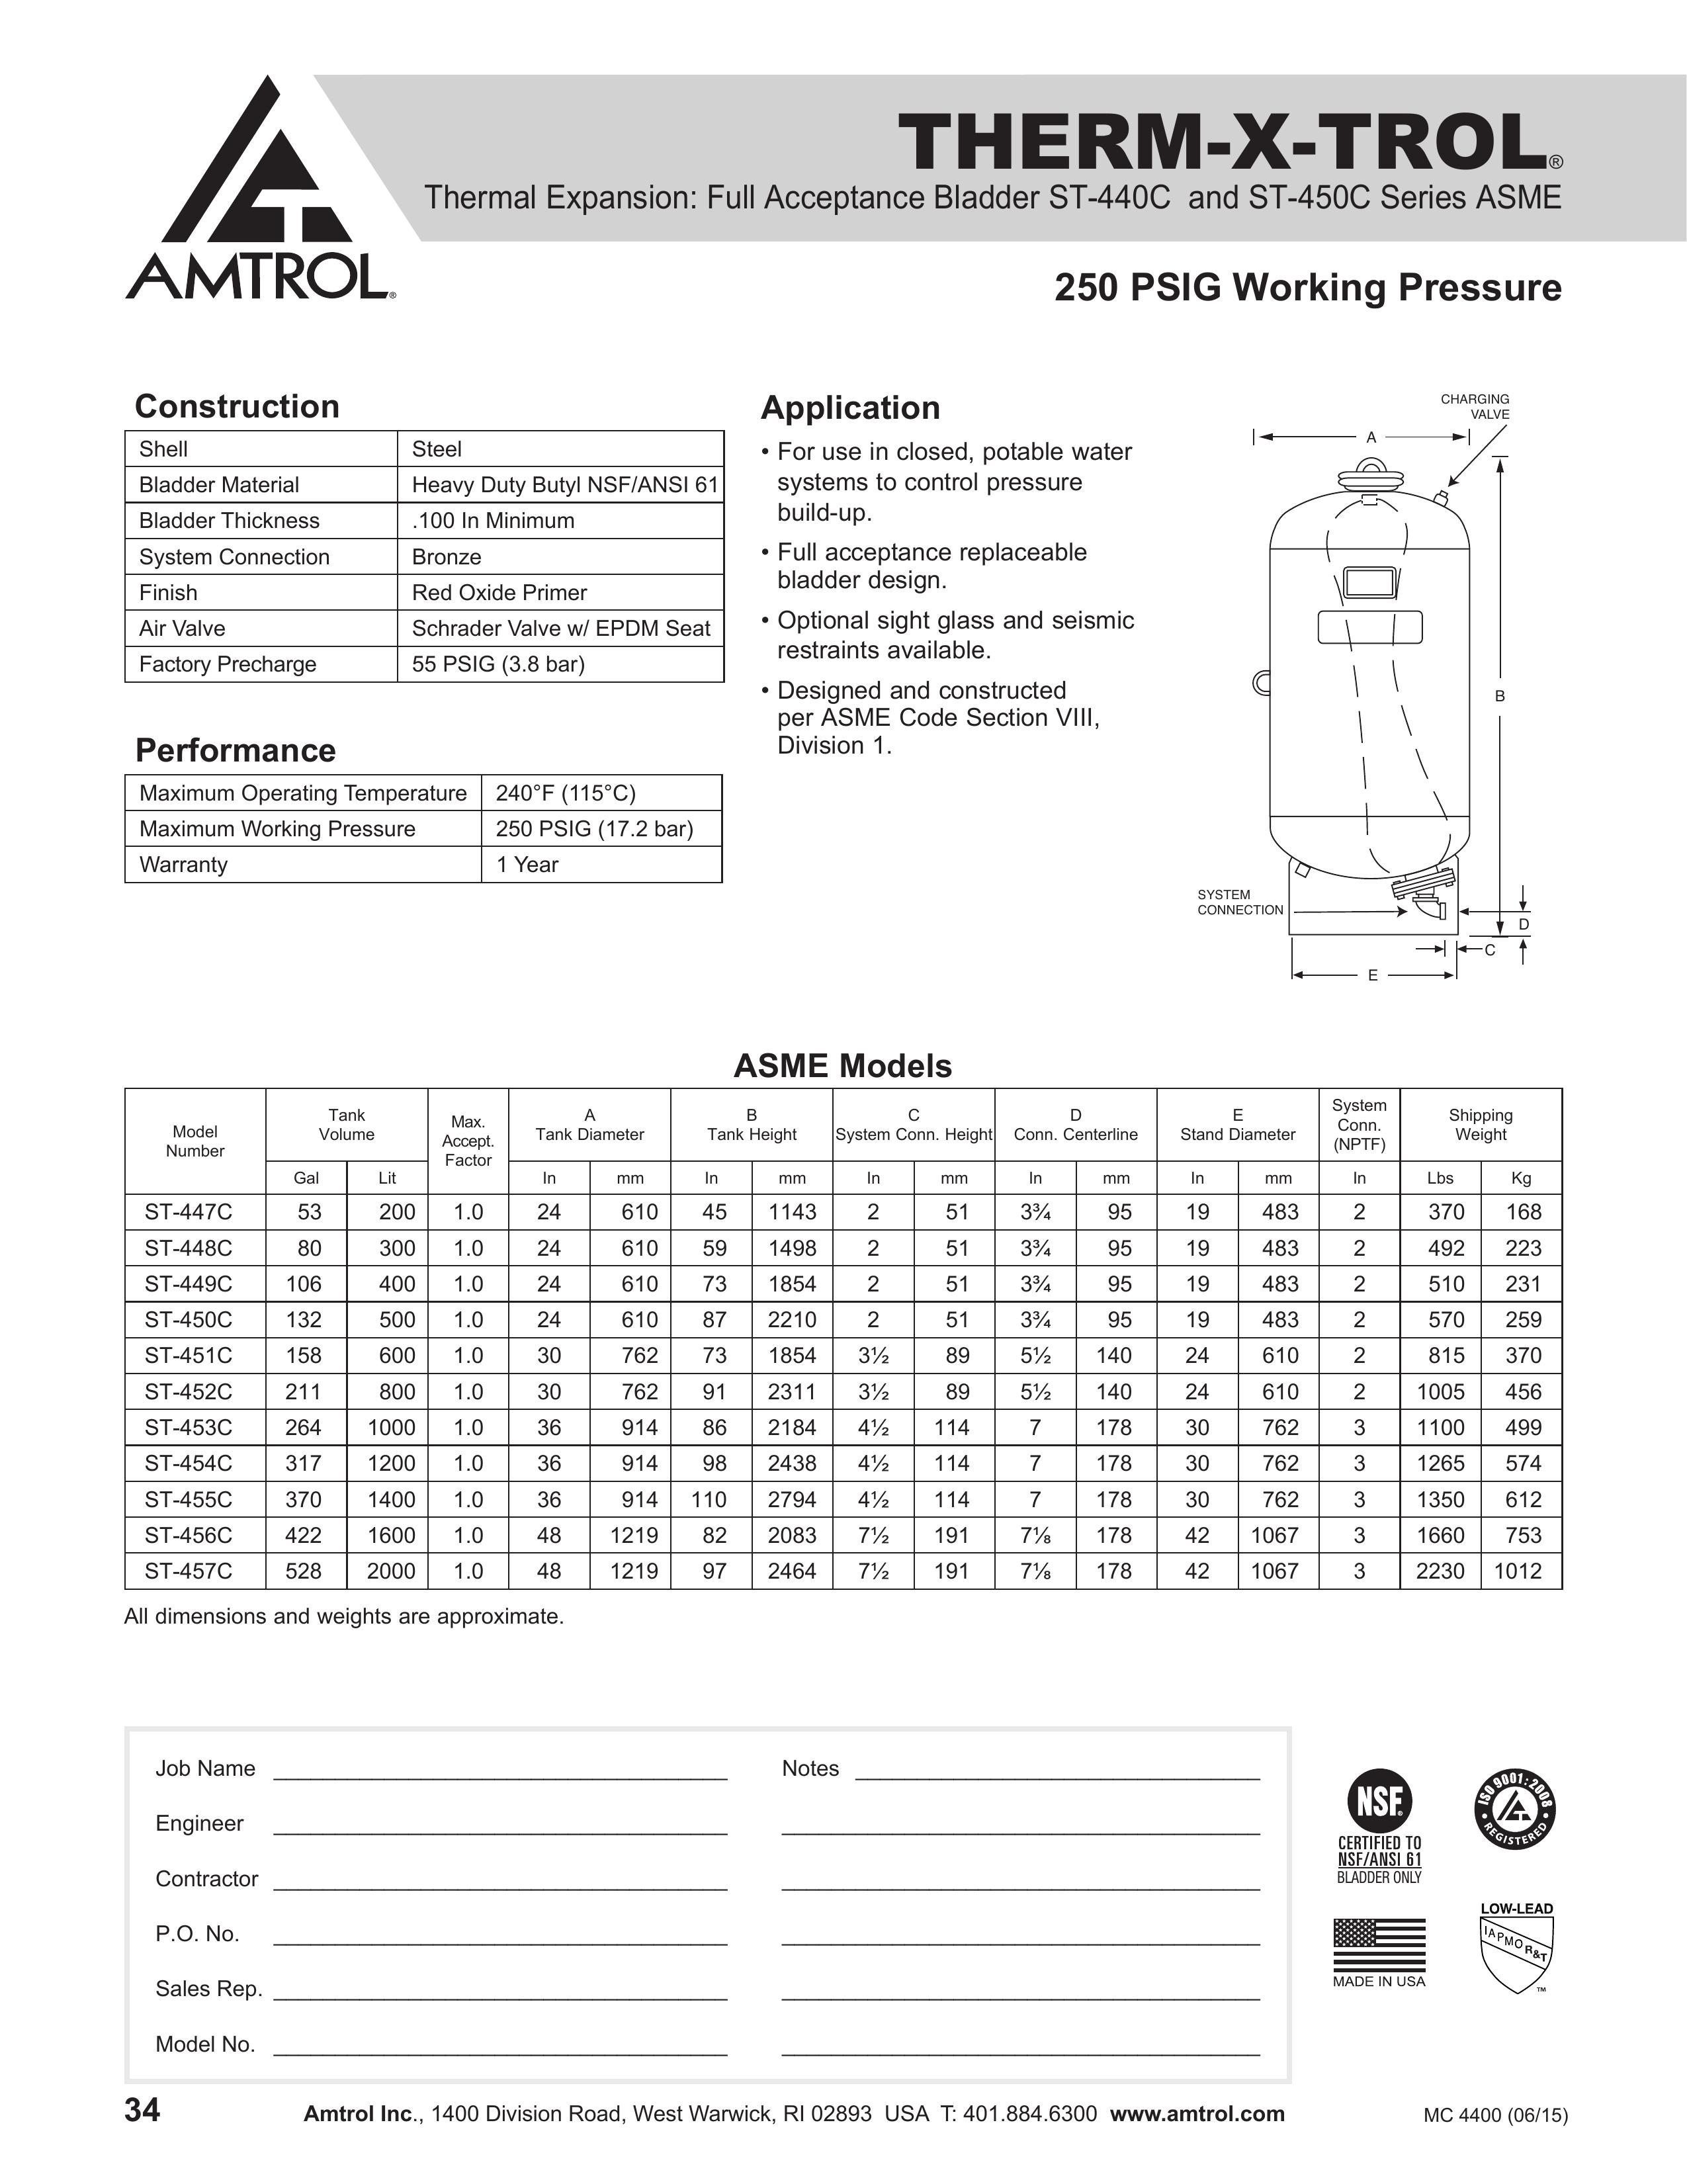 Amtrol ST-456C Slow Cooker User Manual